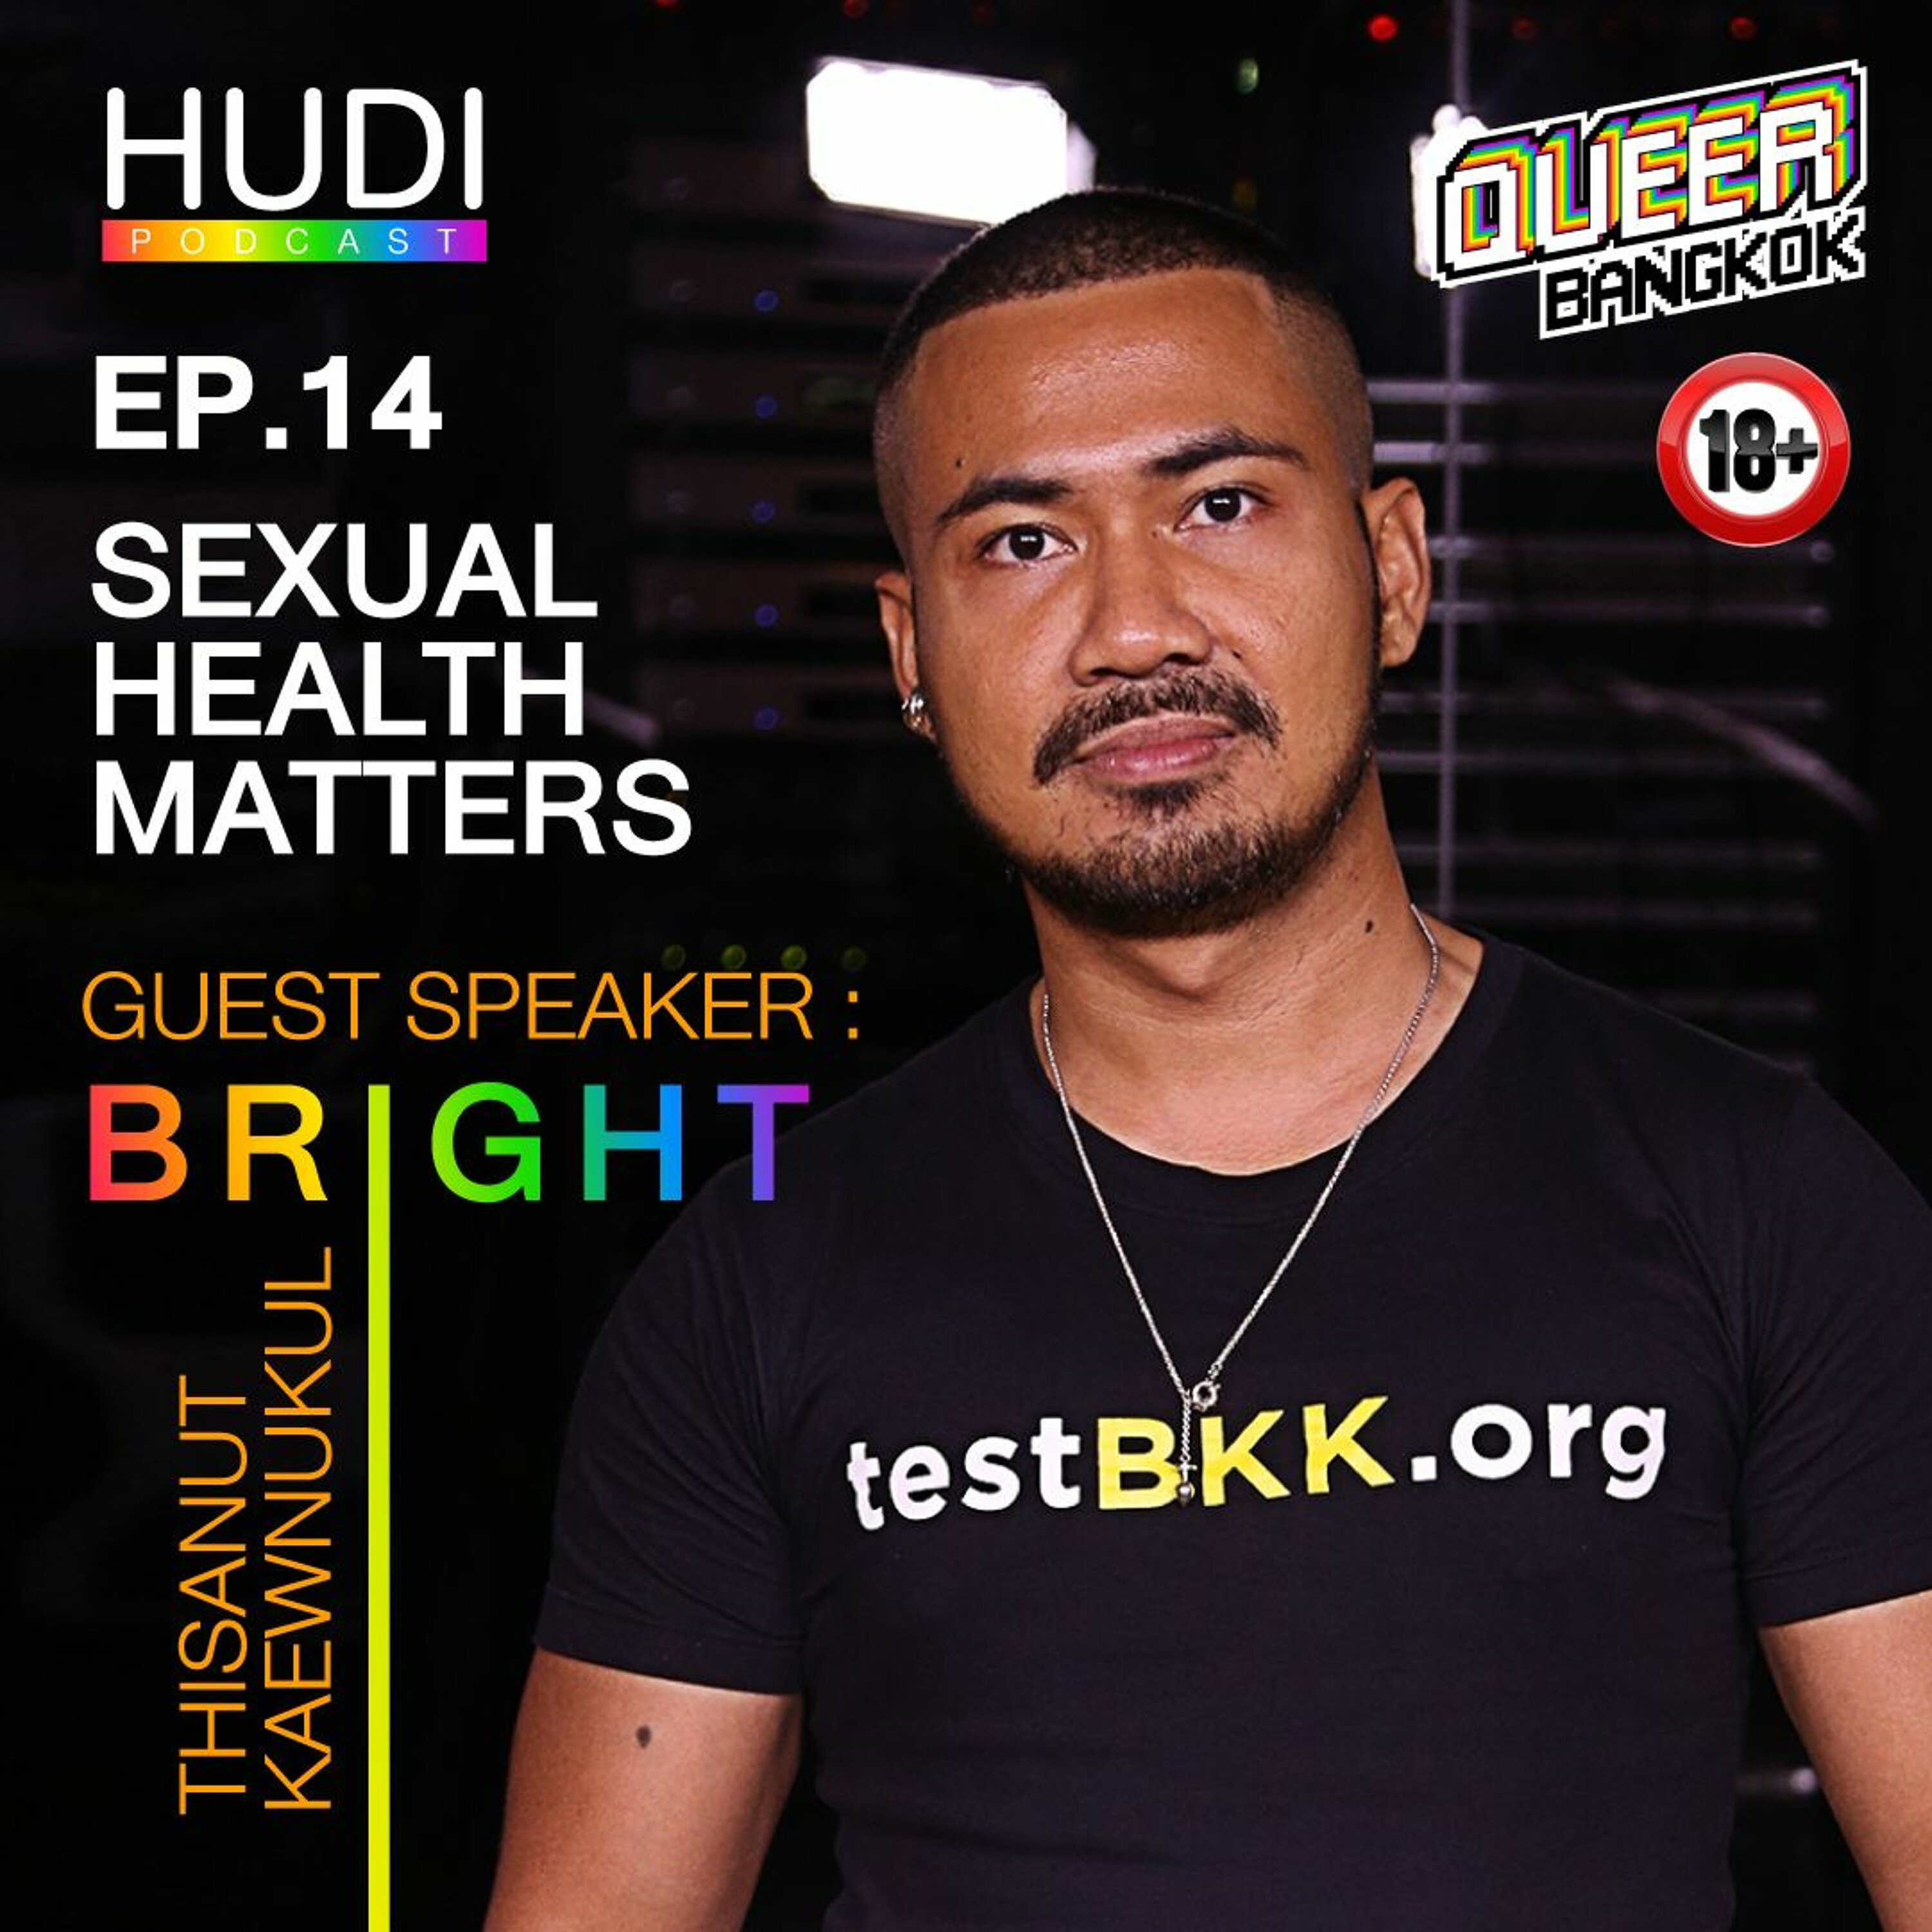 Queer Bangkok Ep.14 - Sexual Health Matters